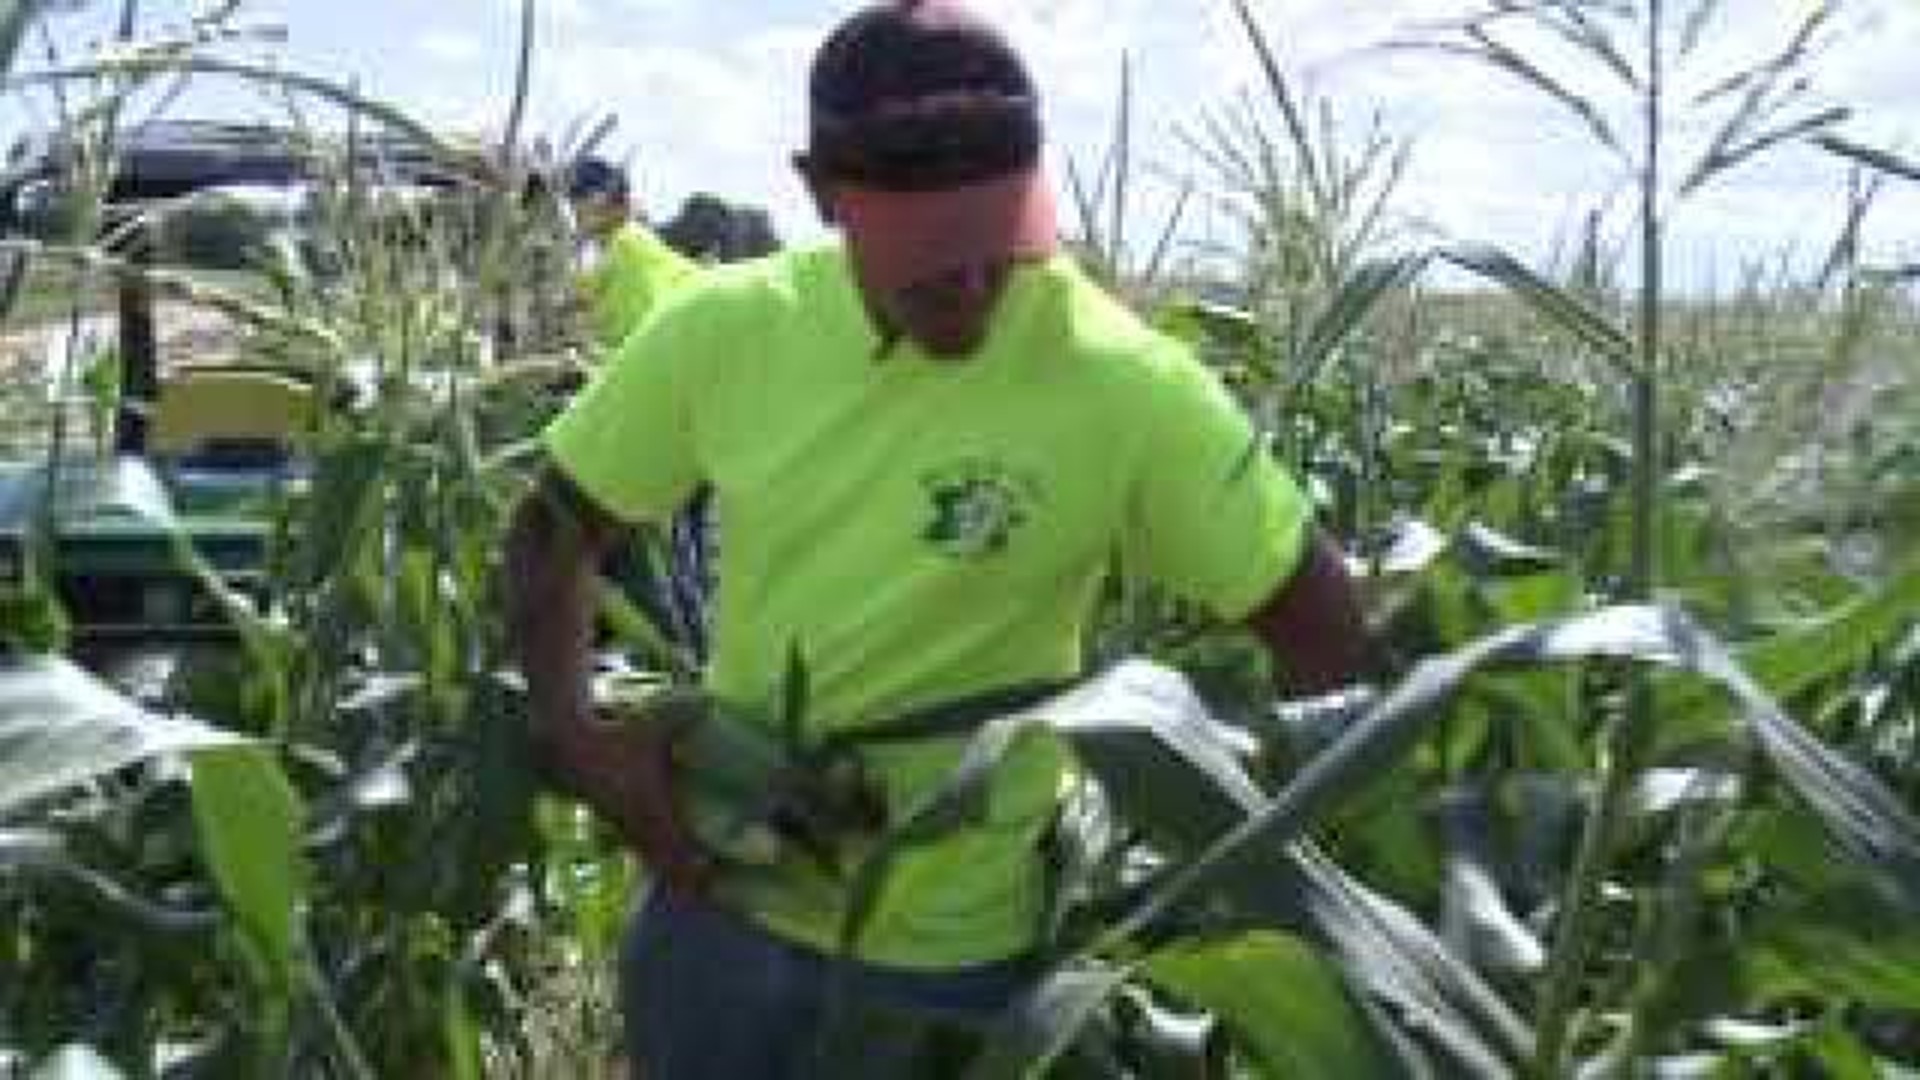 Magnolia Crest Farms expectng bumper sweet corn crop